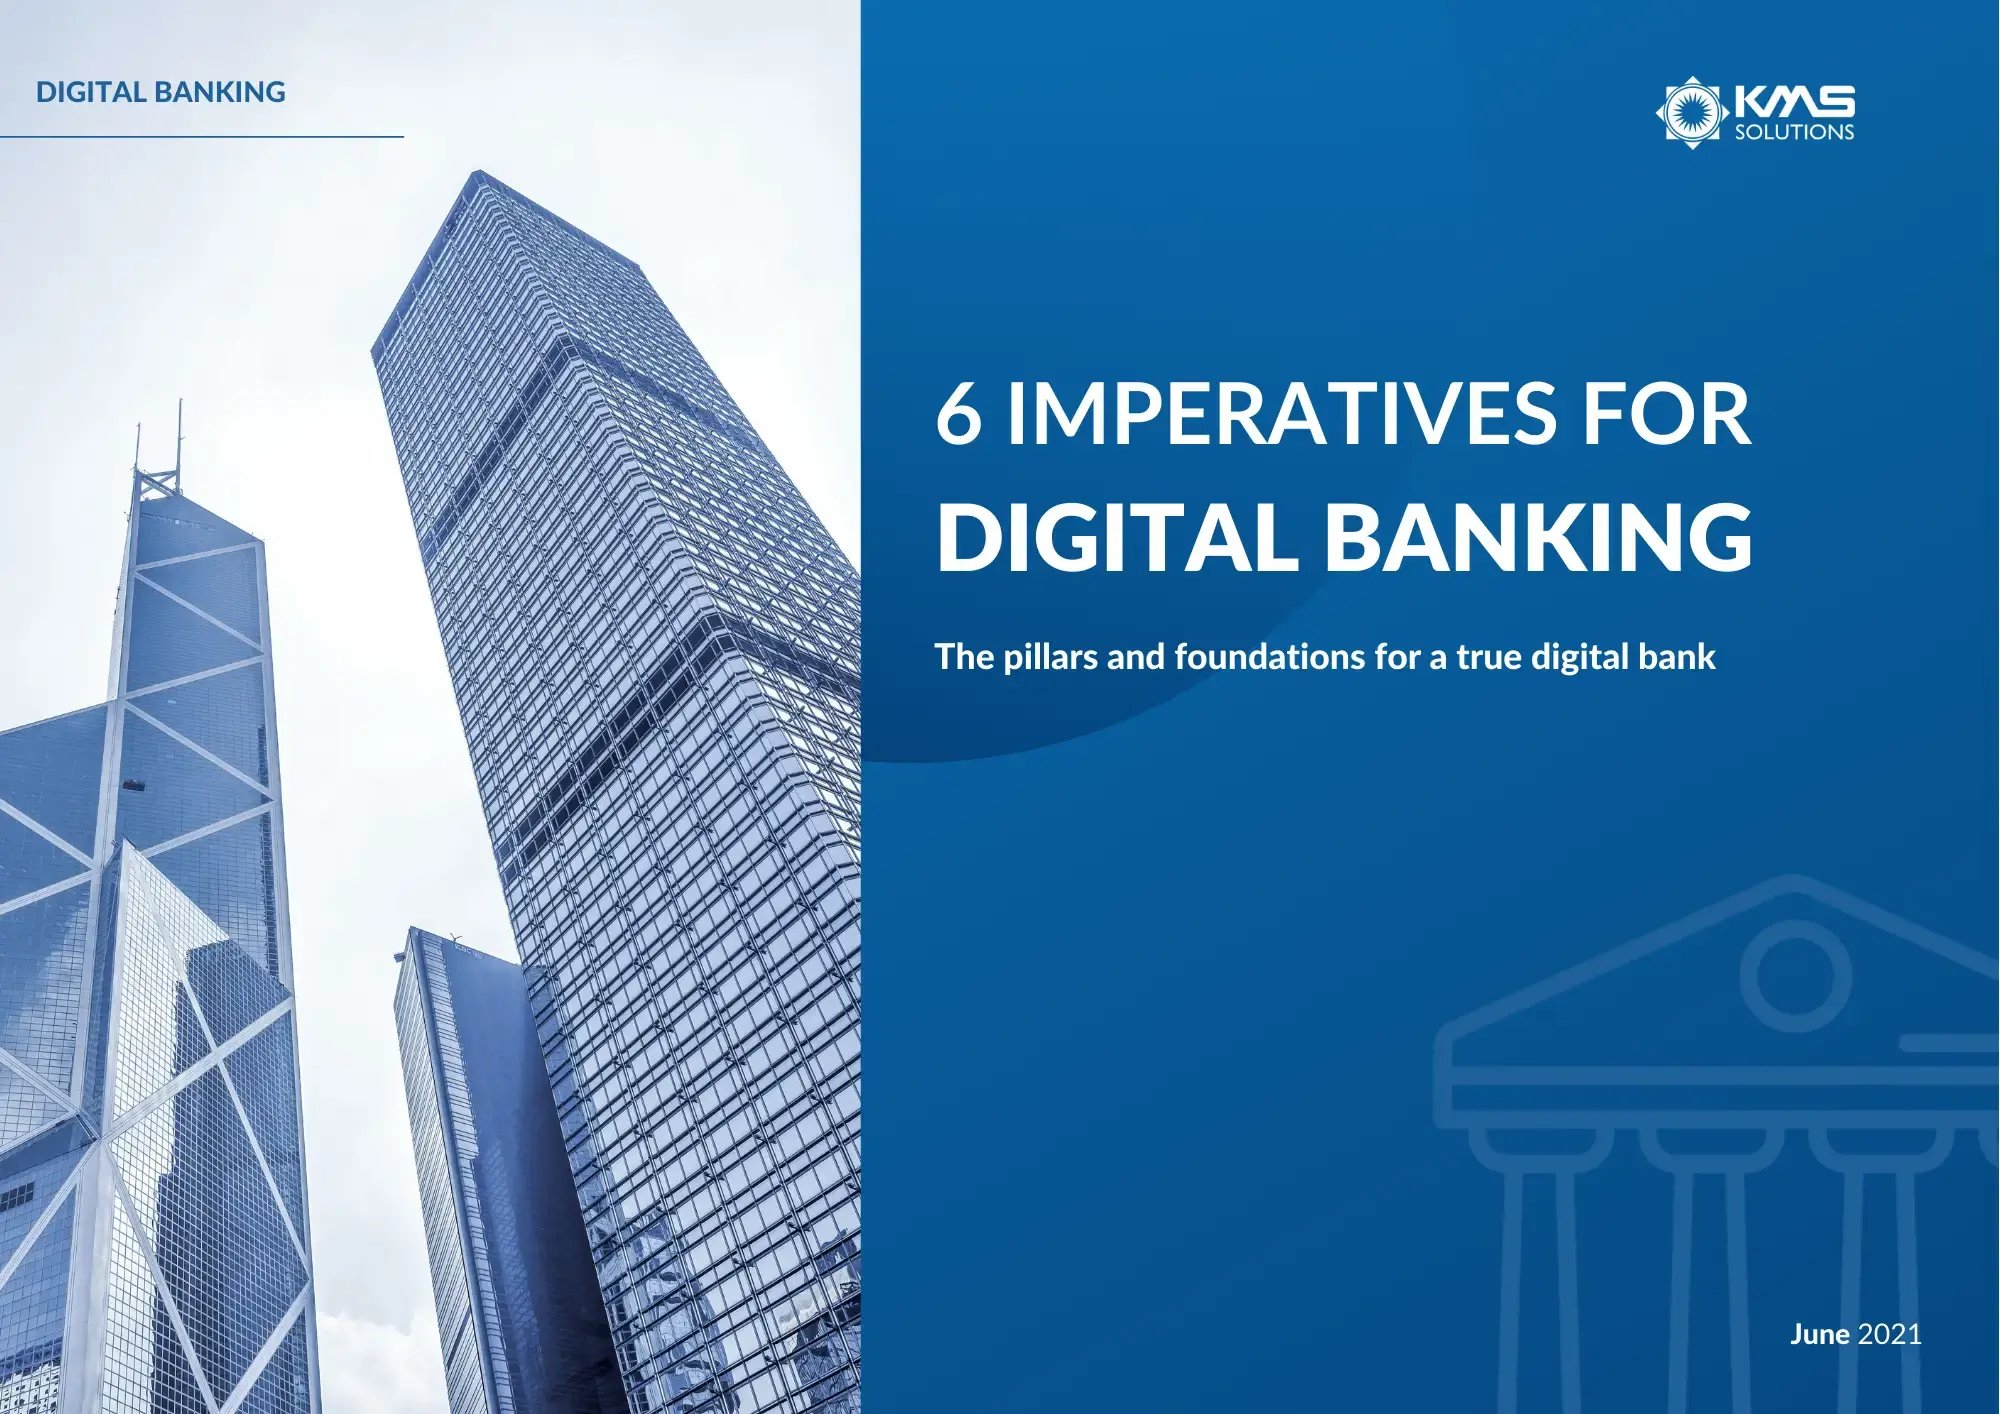 The Digital Banking Model